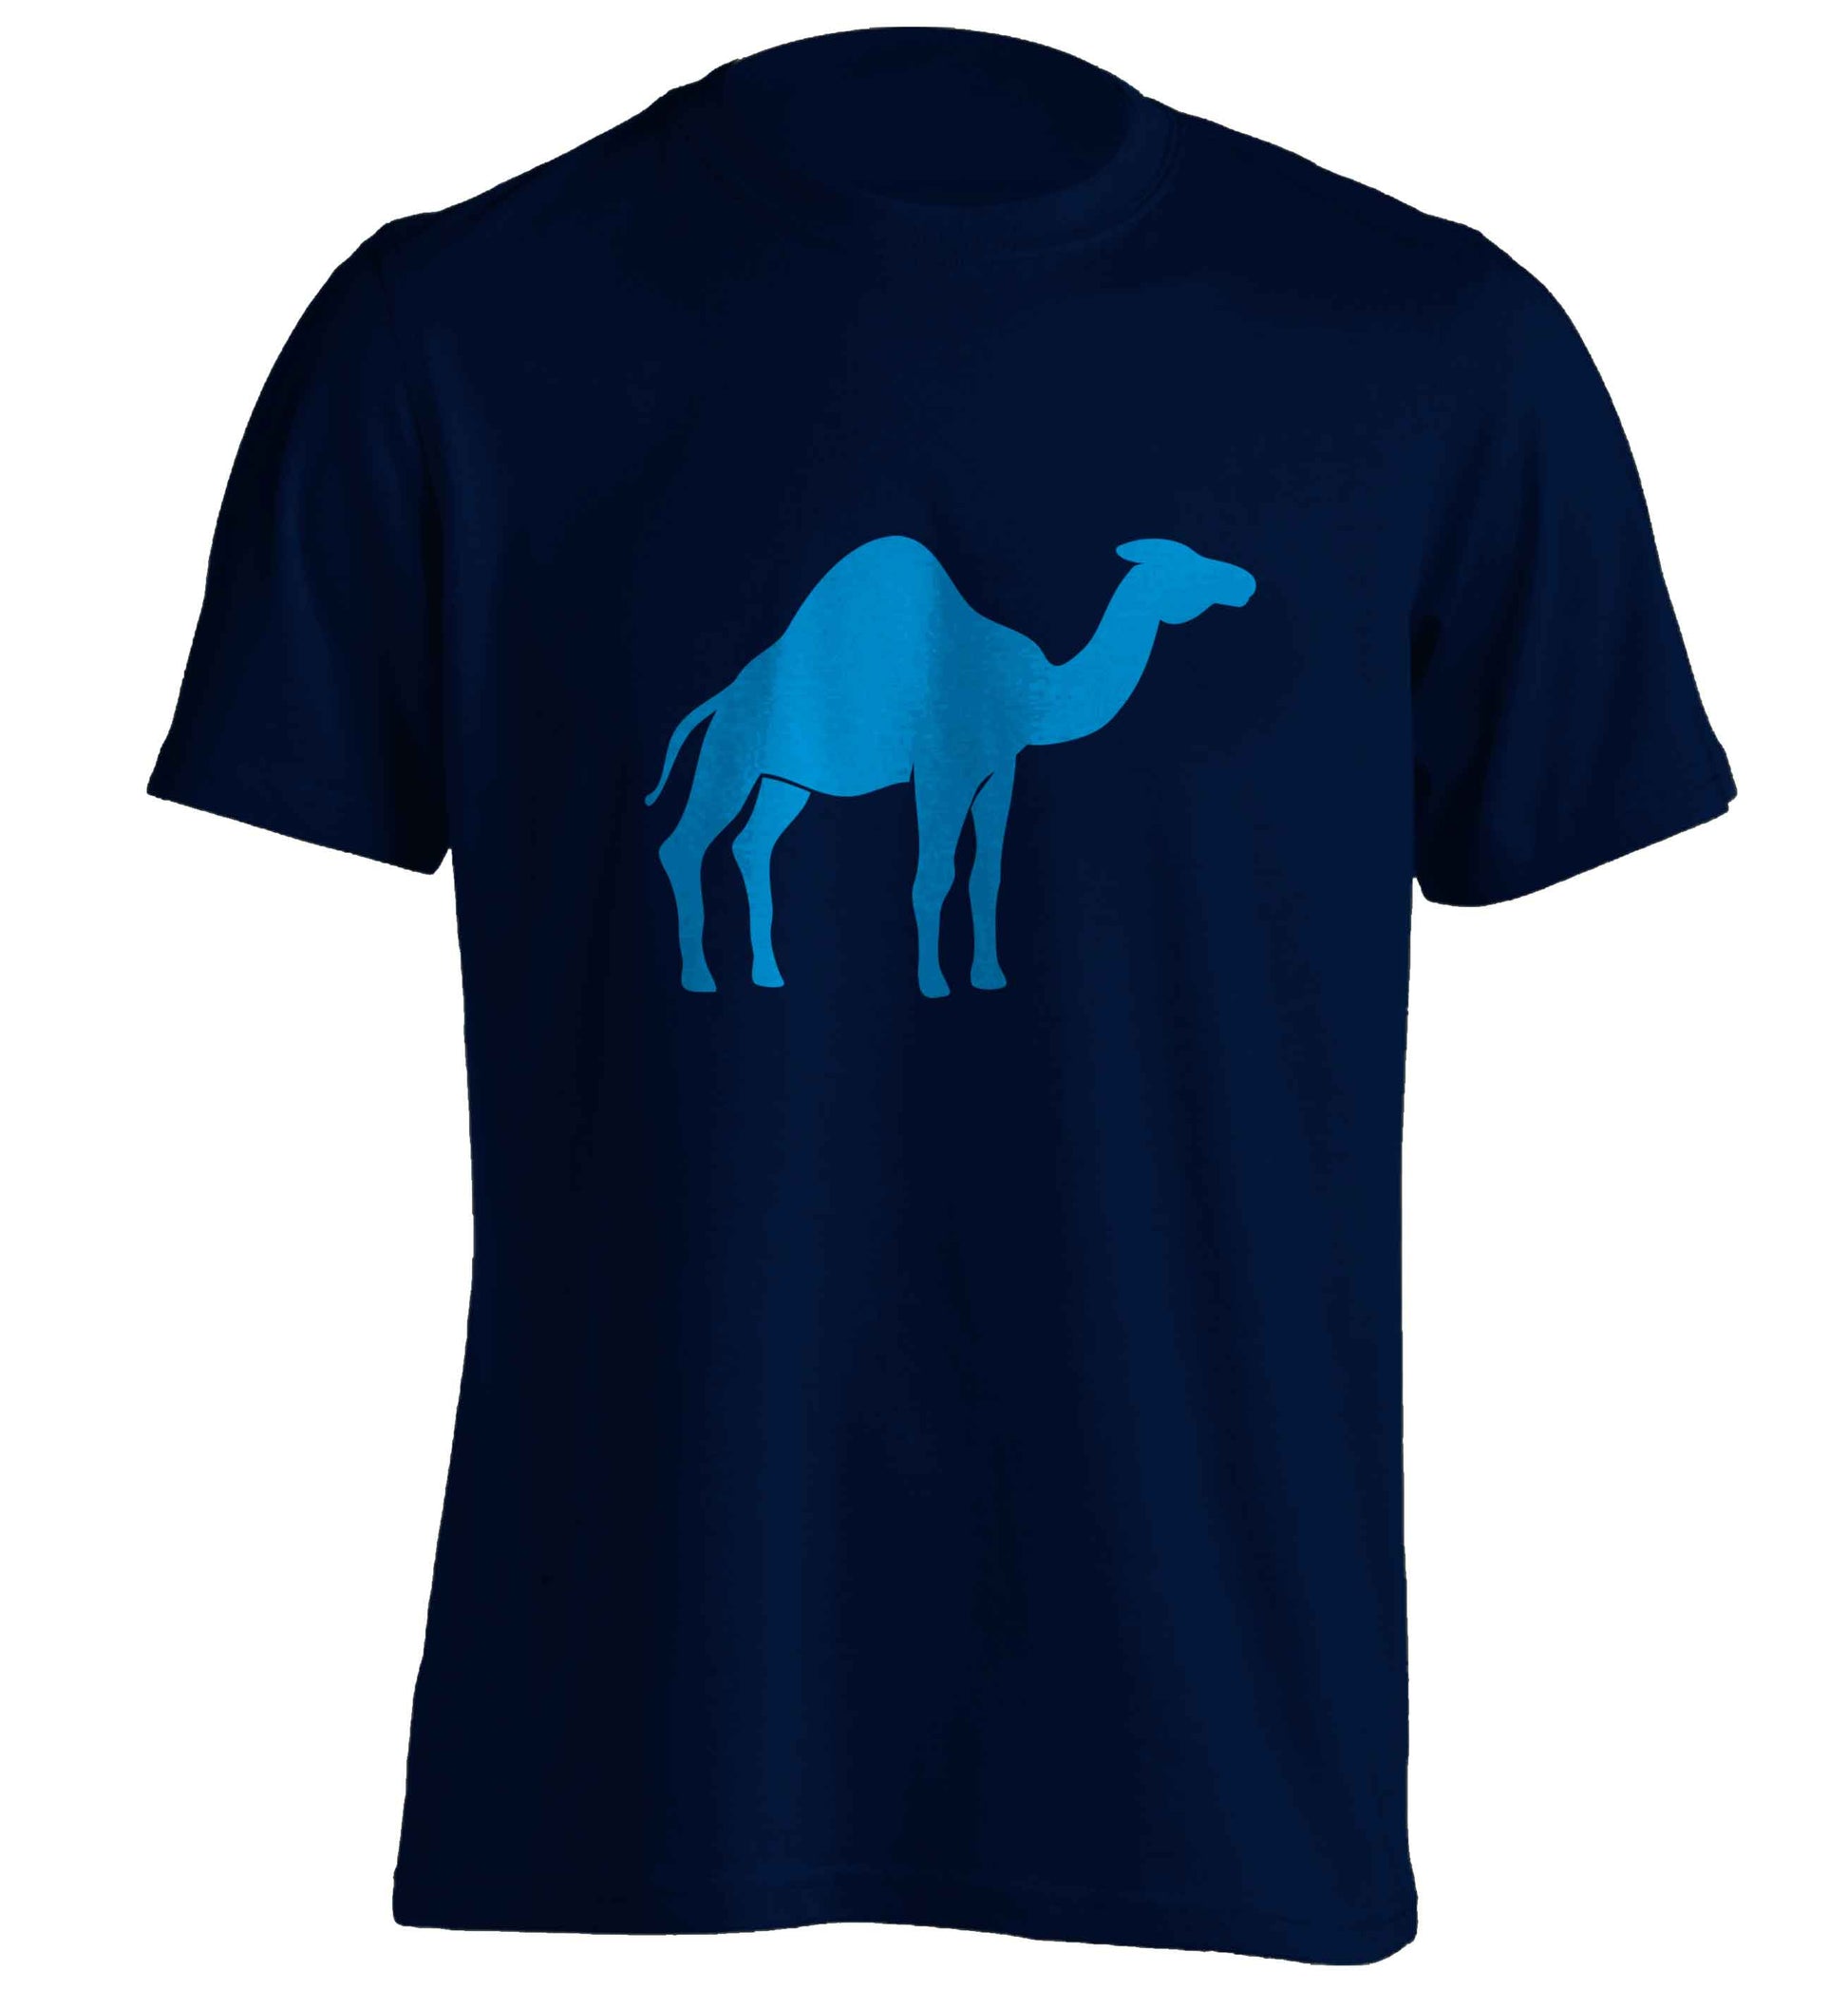 Blue camel adults unisex navy Tshirt 2XL